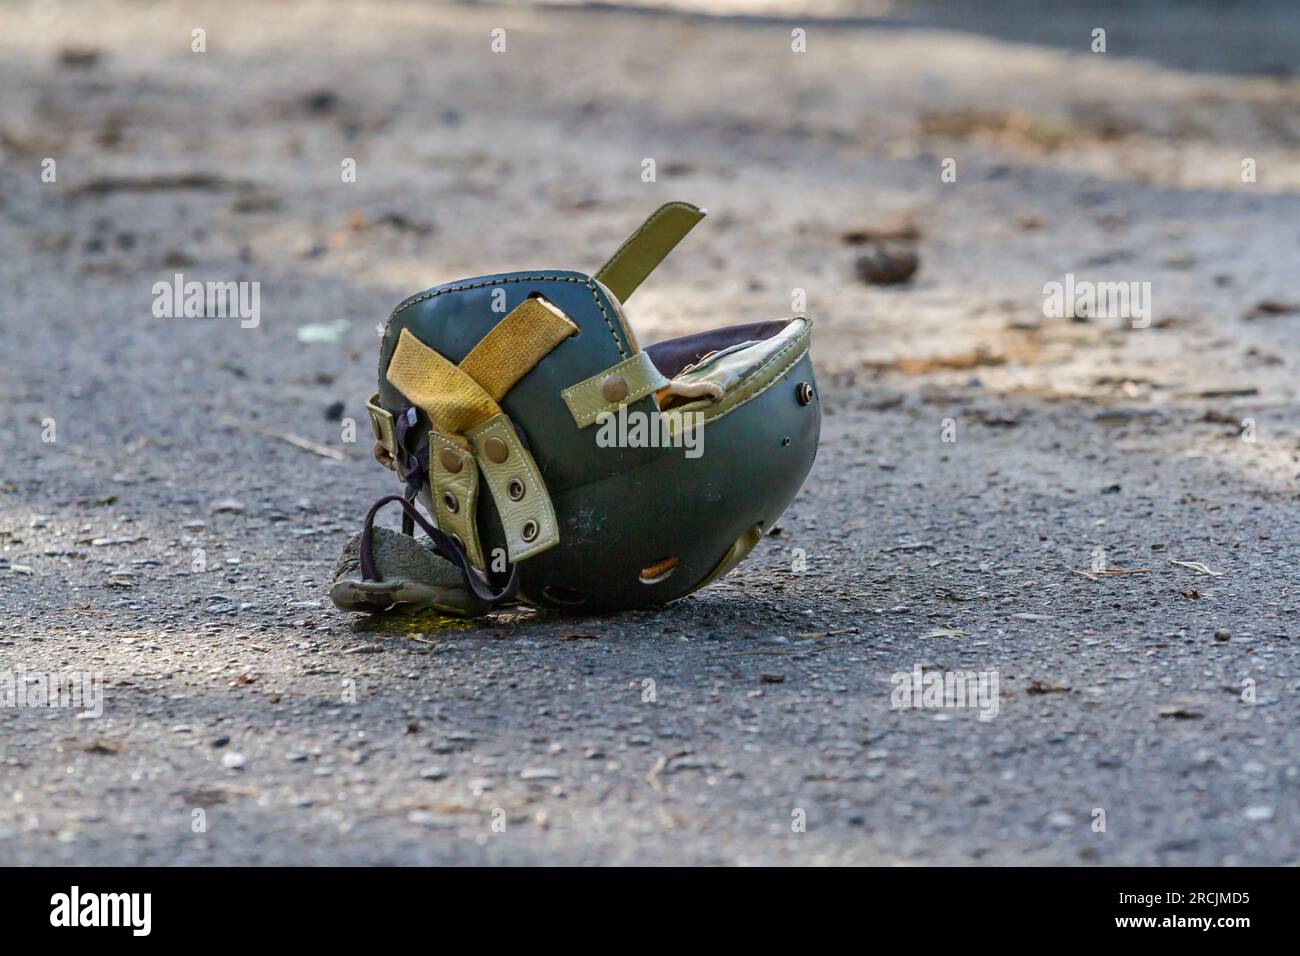 U.S. World War II tanker helmet lies on the ground Stock Photo